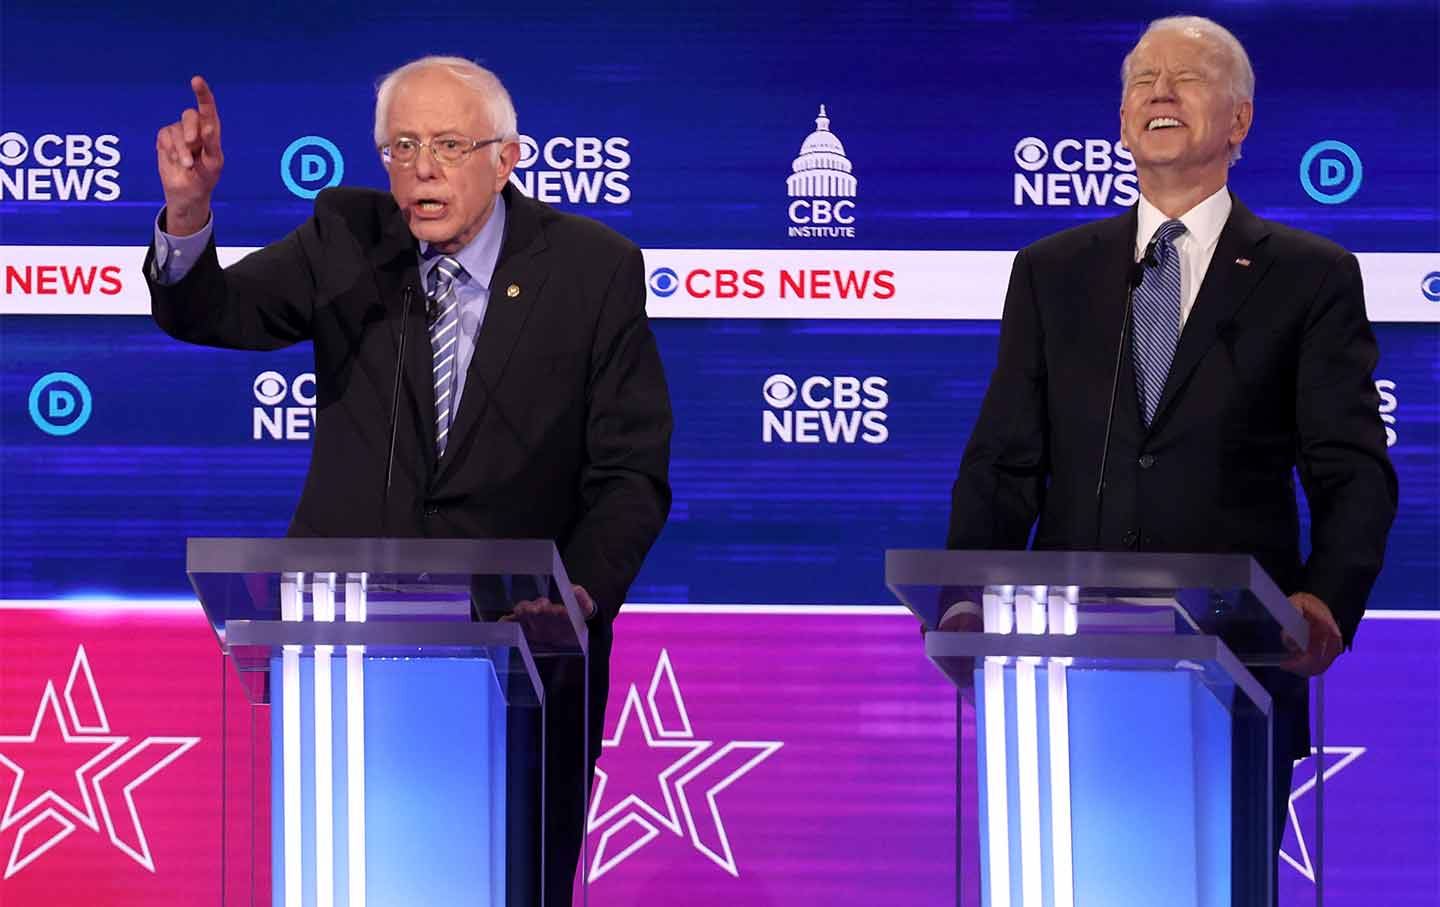 On Biden’s Big Night, Sanders Warns Against ‘Same Old’ Politics